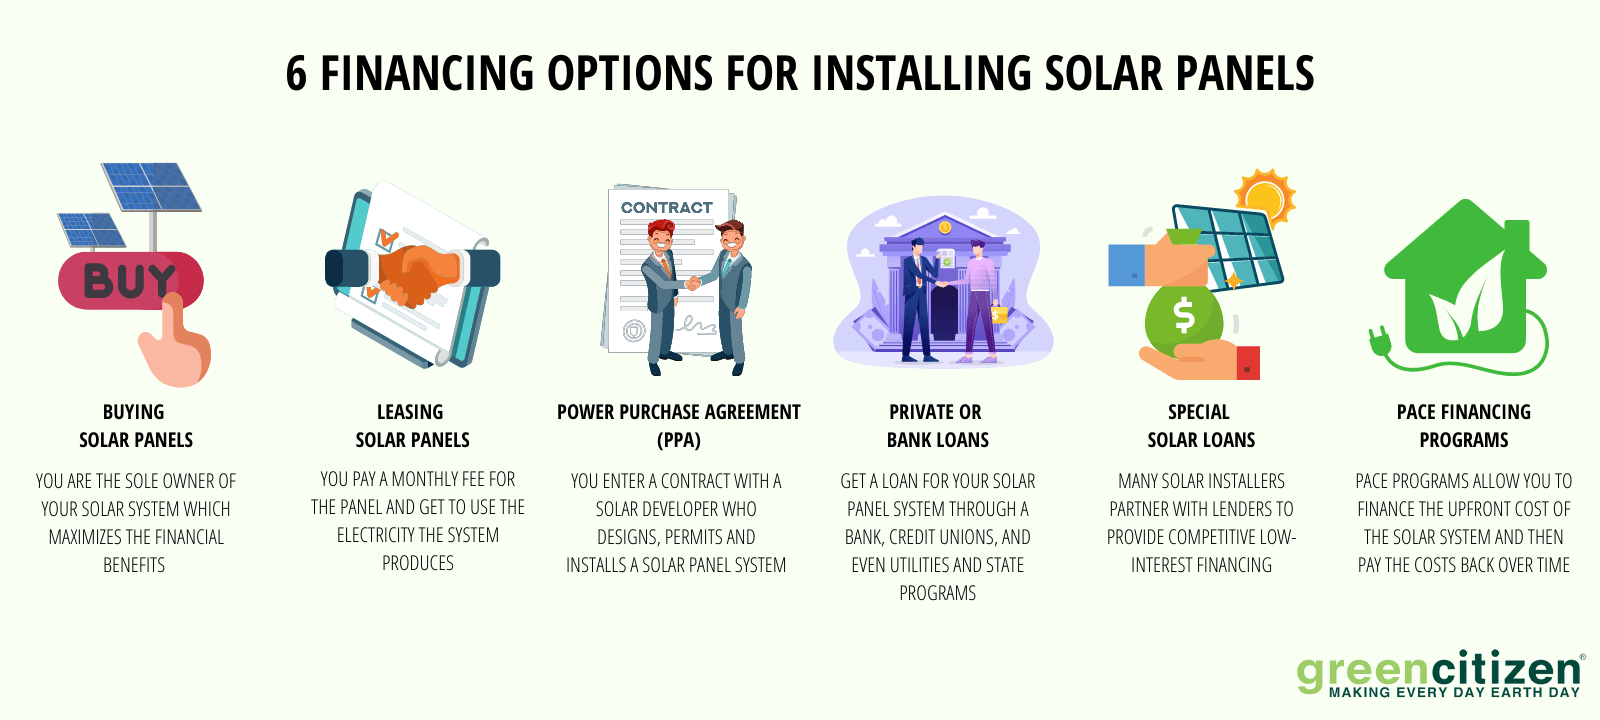 Financing options for installing solar panels